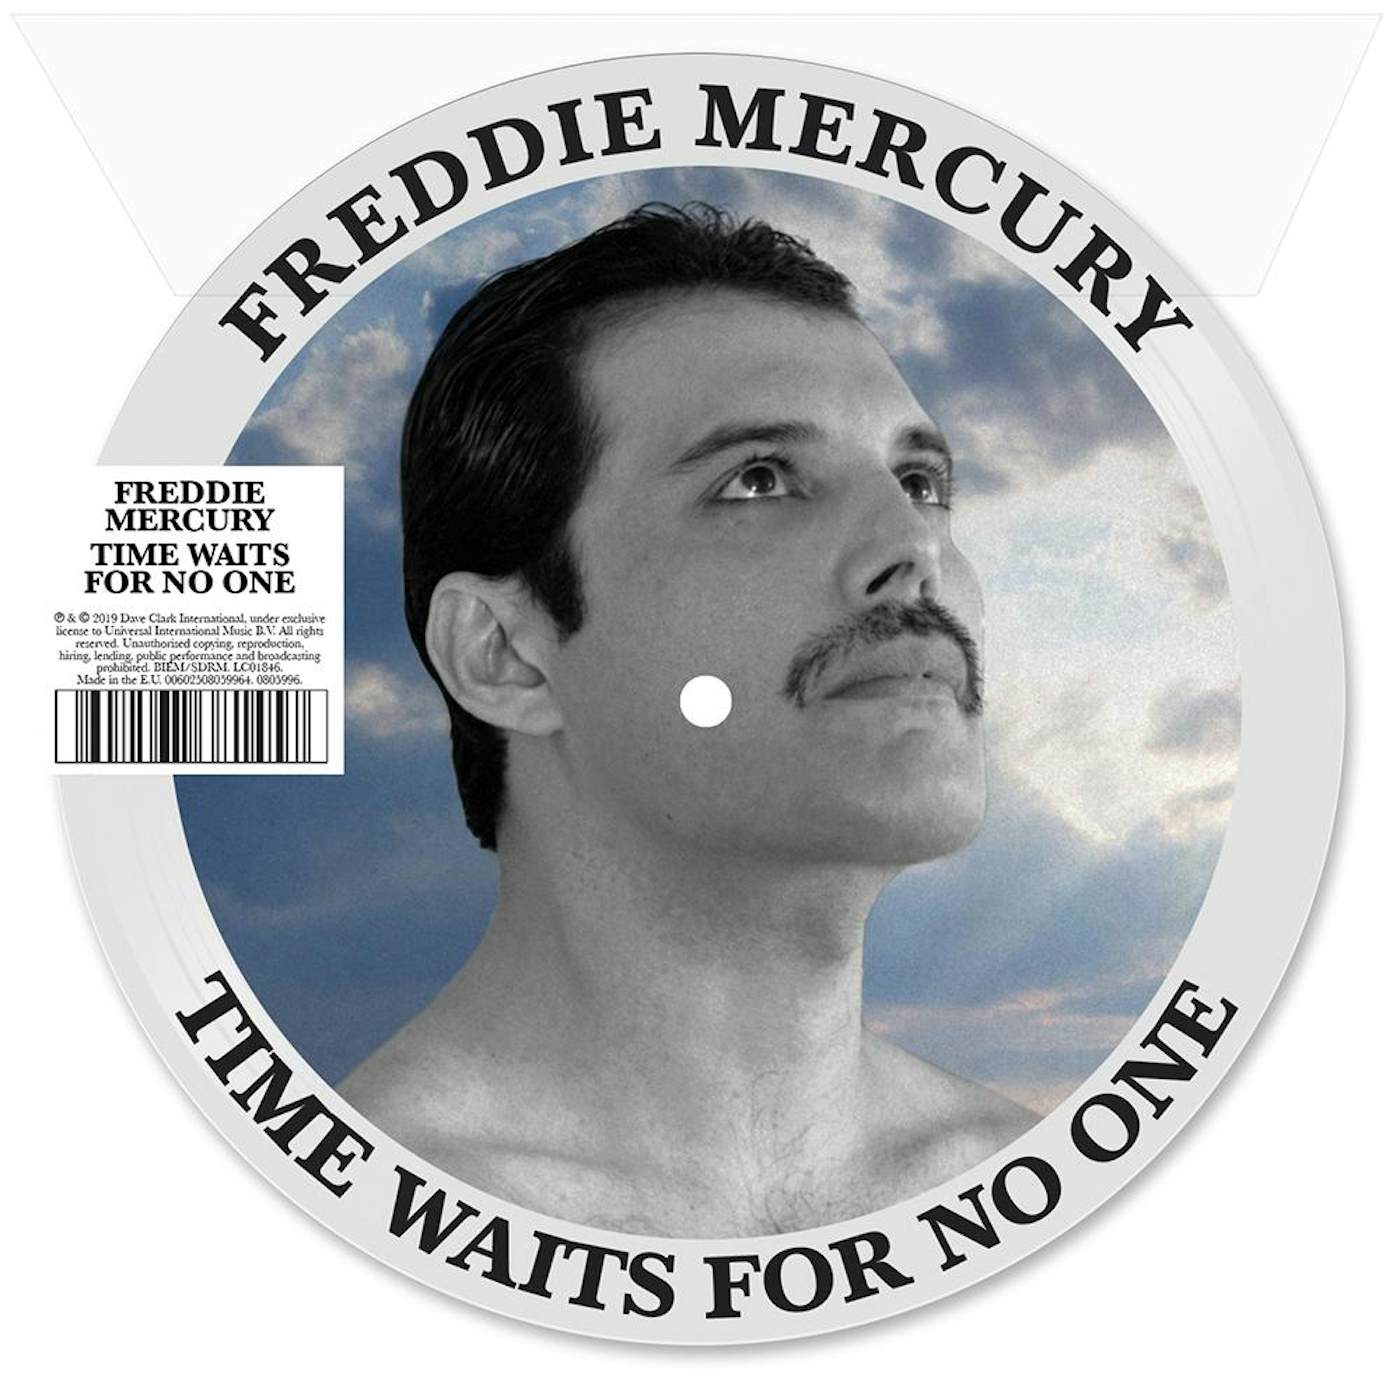 Freddie Mercury Time Waits For No One 7" (Vinyl)